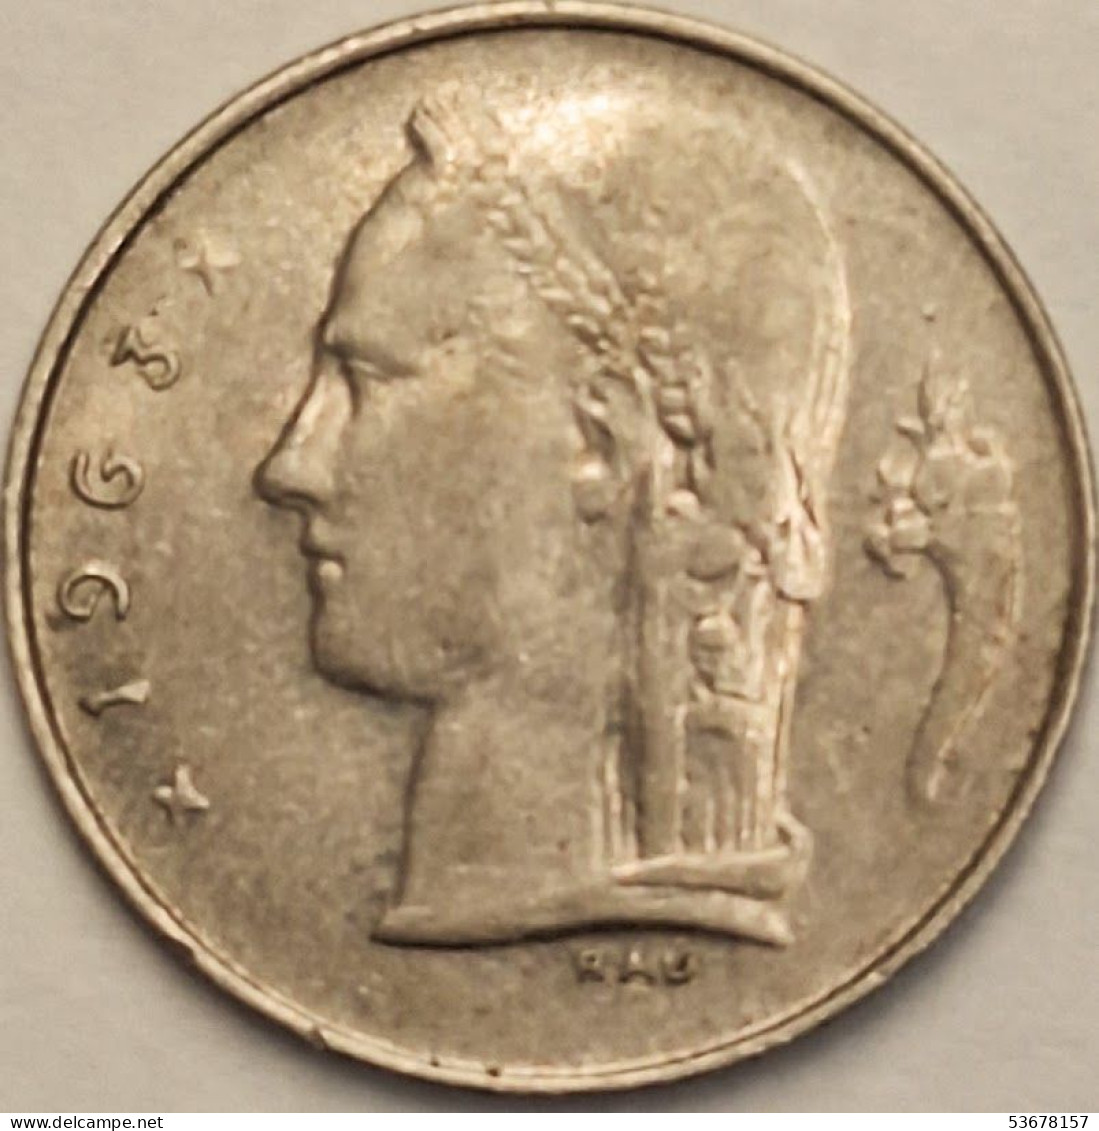 Belgium - Franc 1963, KM# 142.1 (#3112) - 1 Franc